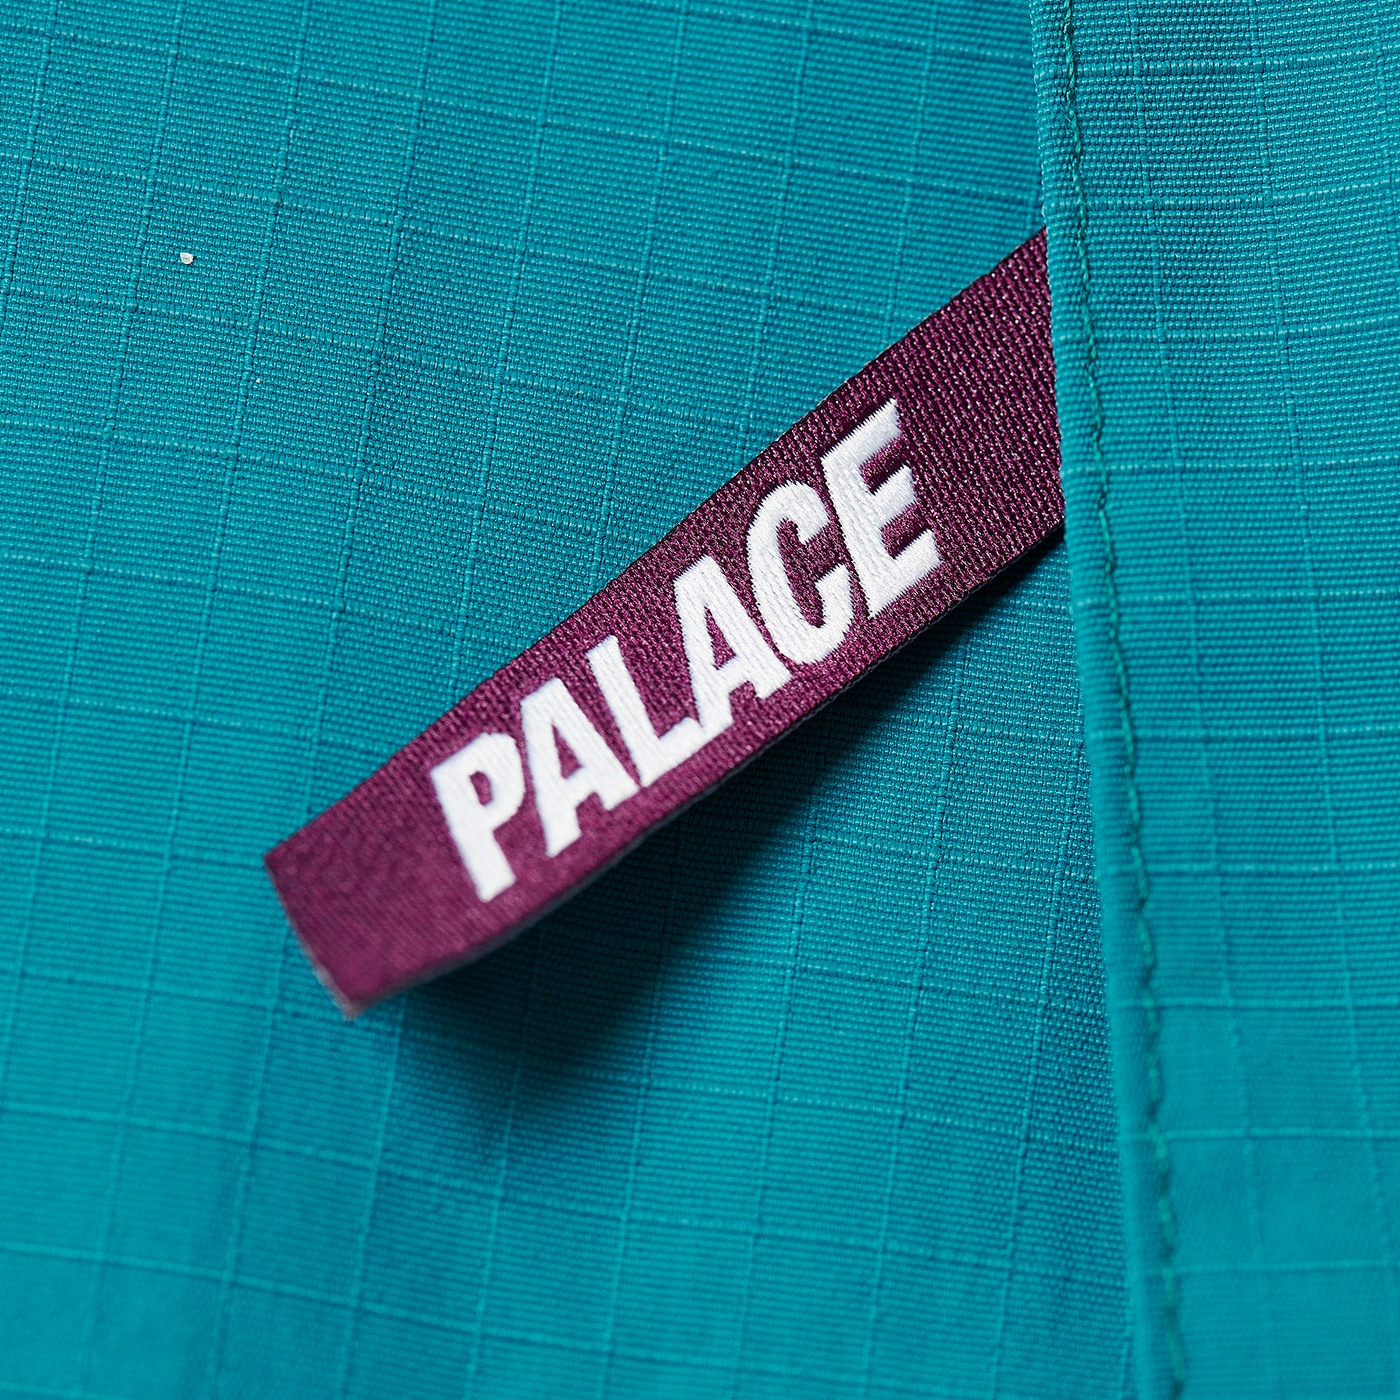 Palace New Balance Pop Over Shell Jacket Teal - Palace New Balance